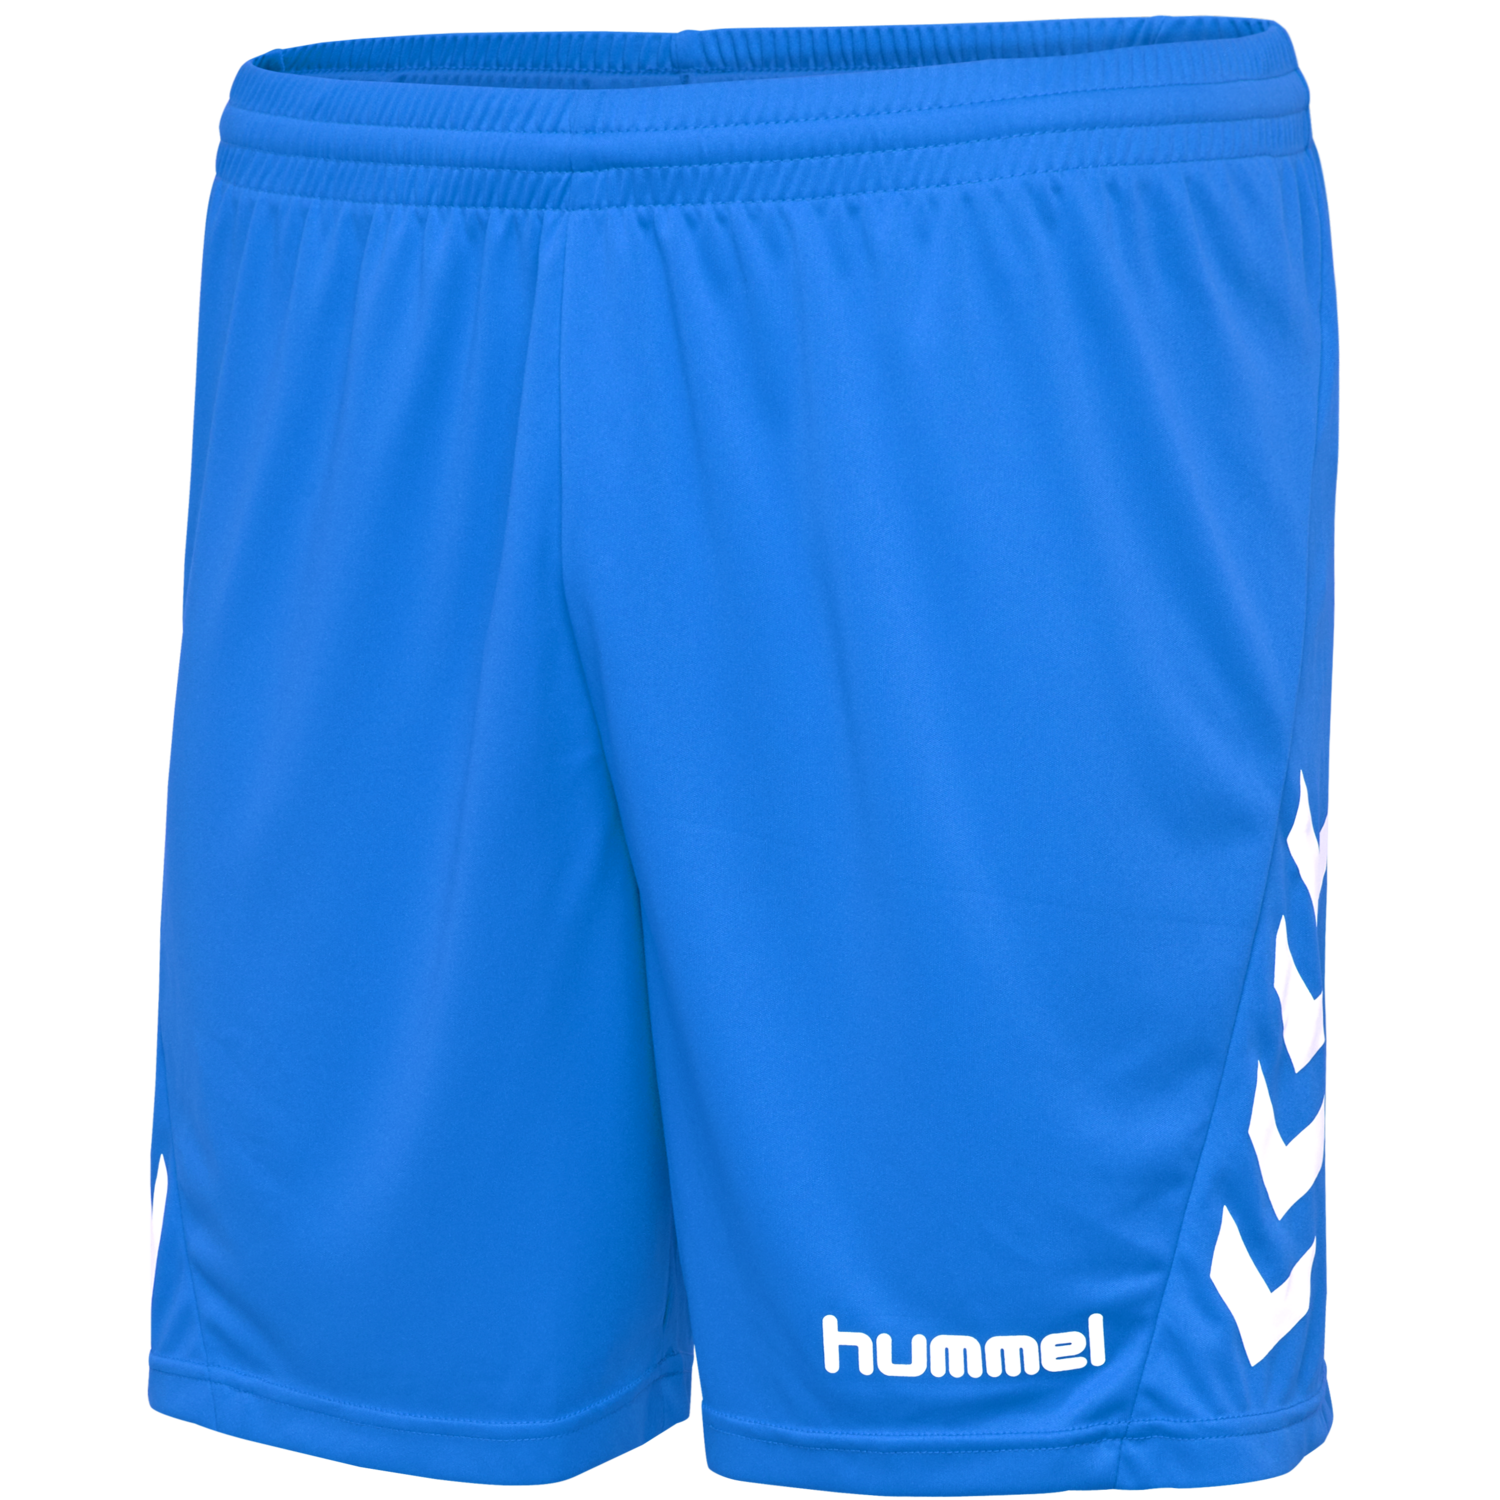 Hummel Hummel Boys Blue   Sweat Shorts Size 10 Years 